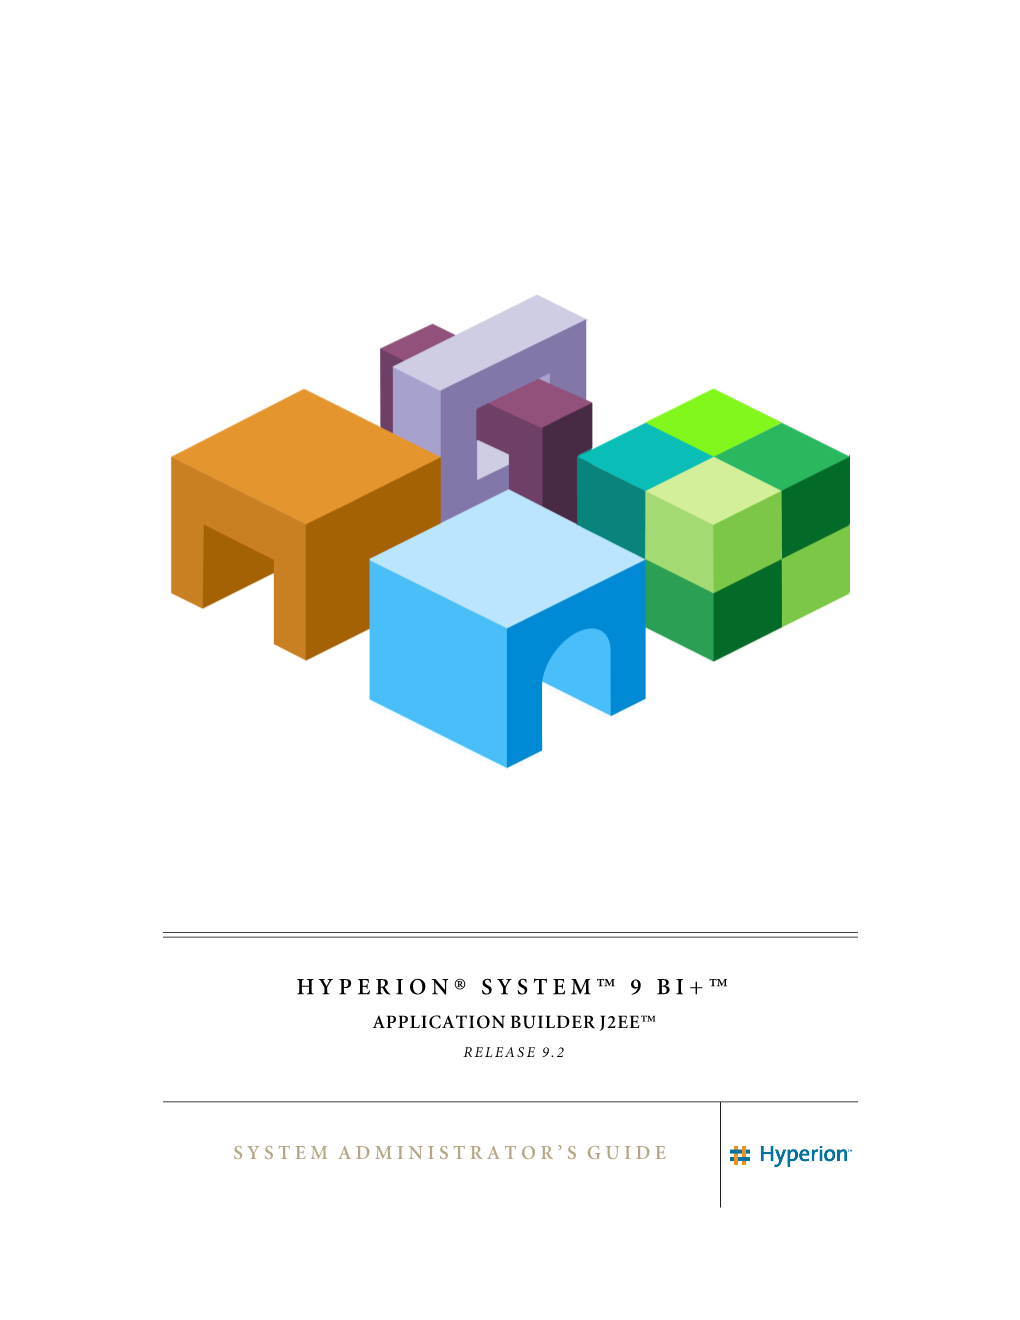 Hyperion System 9 BI+ Application Builder Administrator's Guide